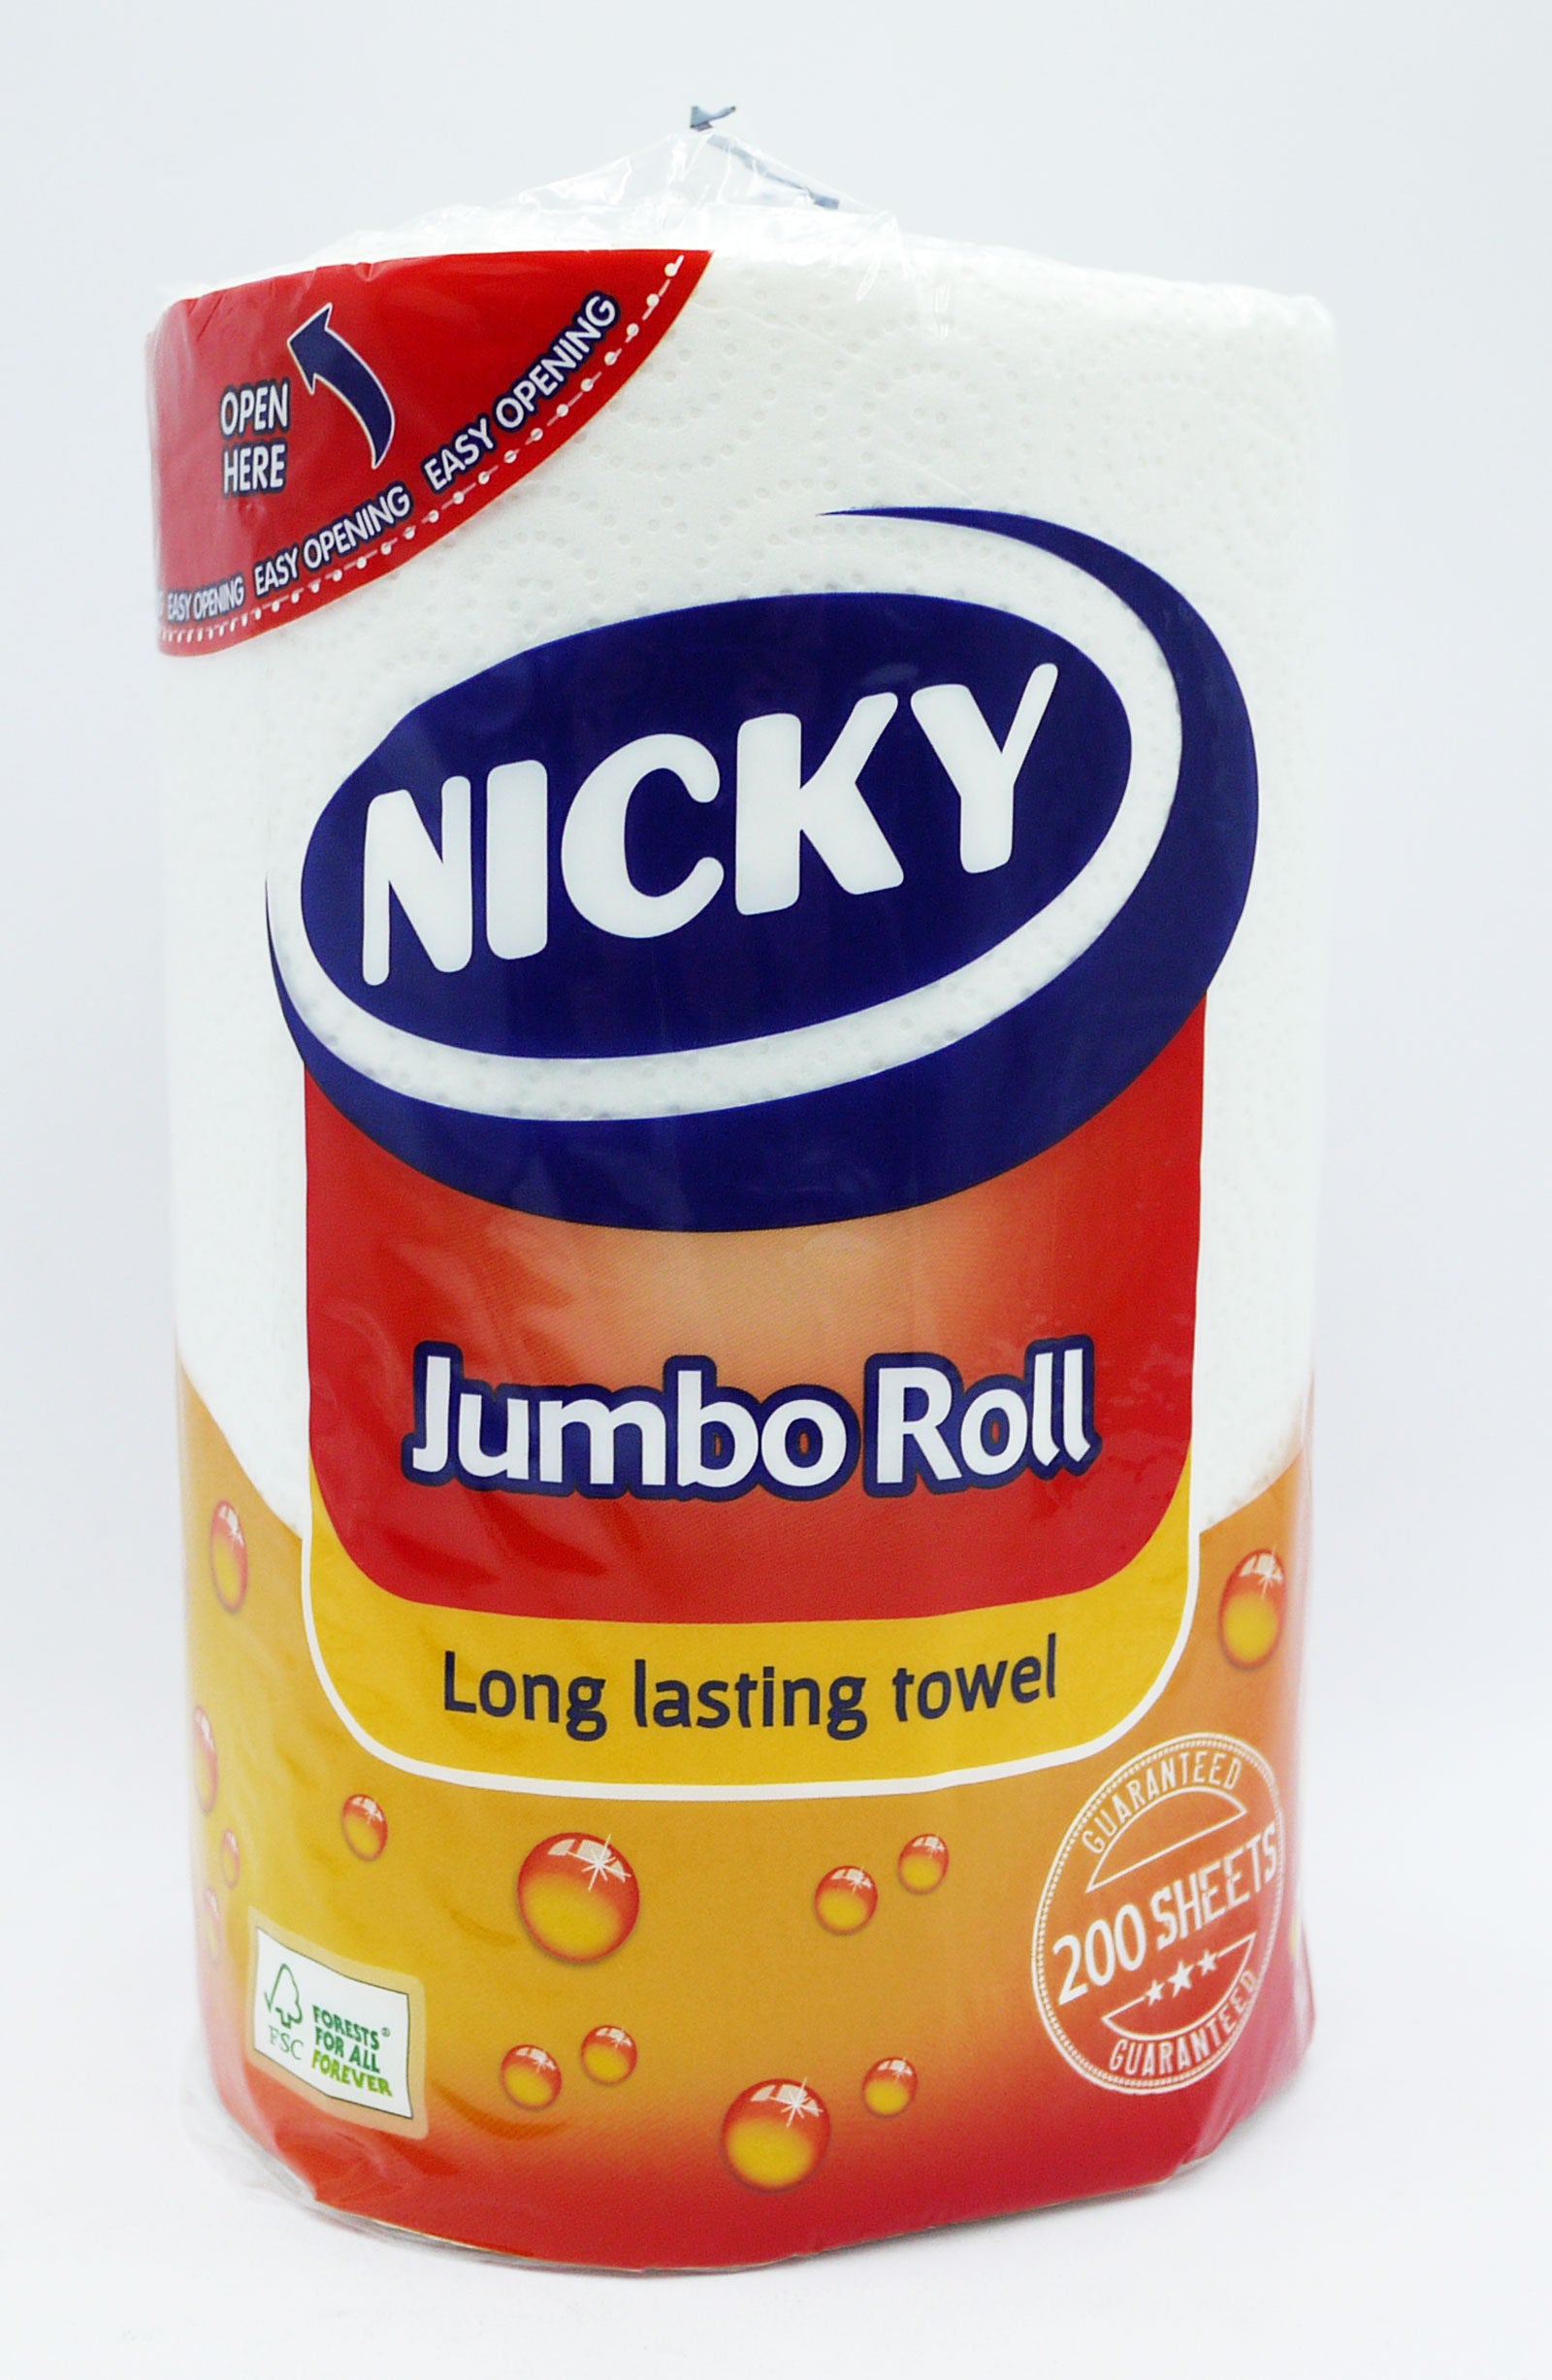 Nicky jumbo Roll 200 Sheets